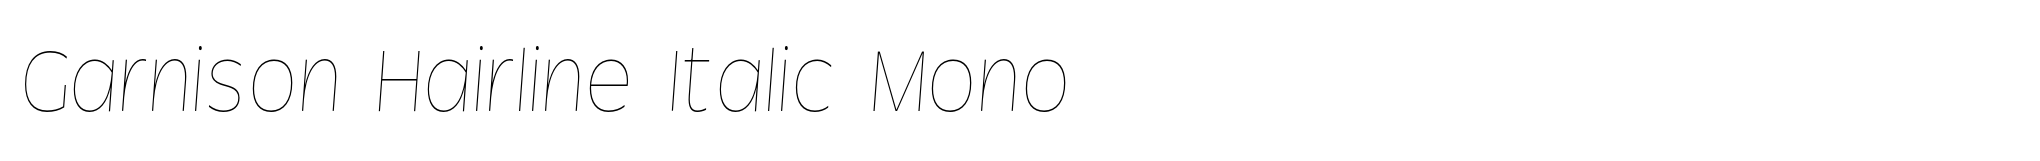 Garnison Hairline Italic Mono image